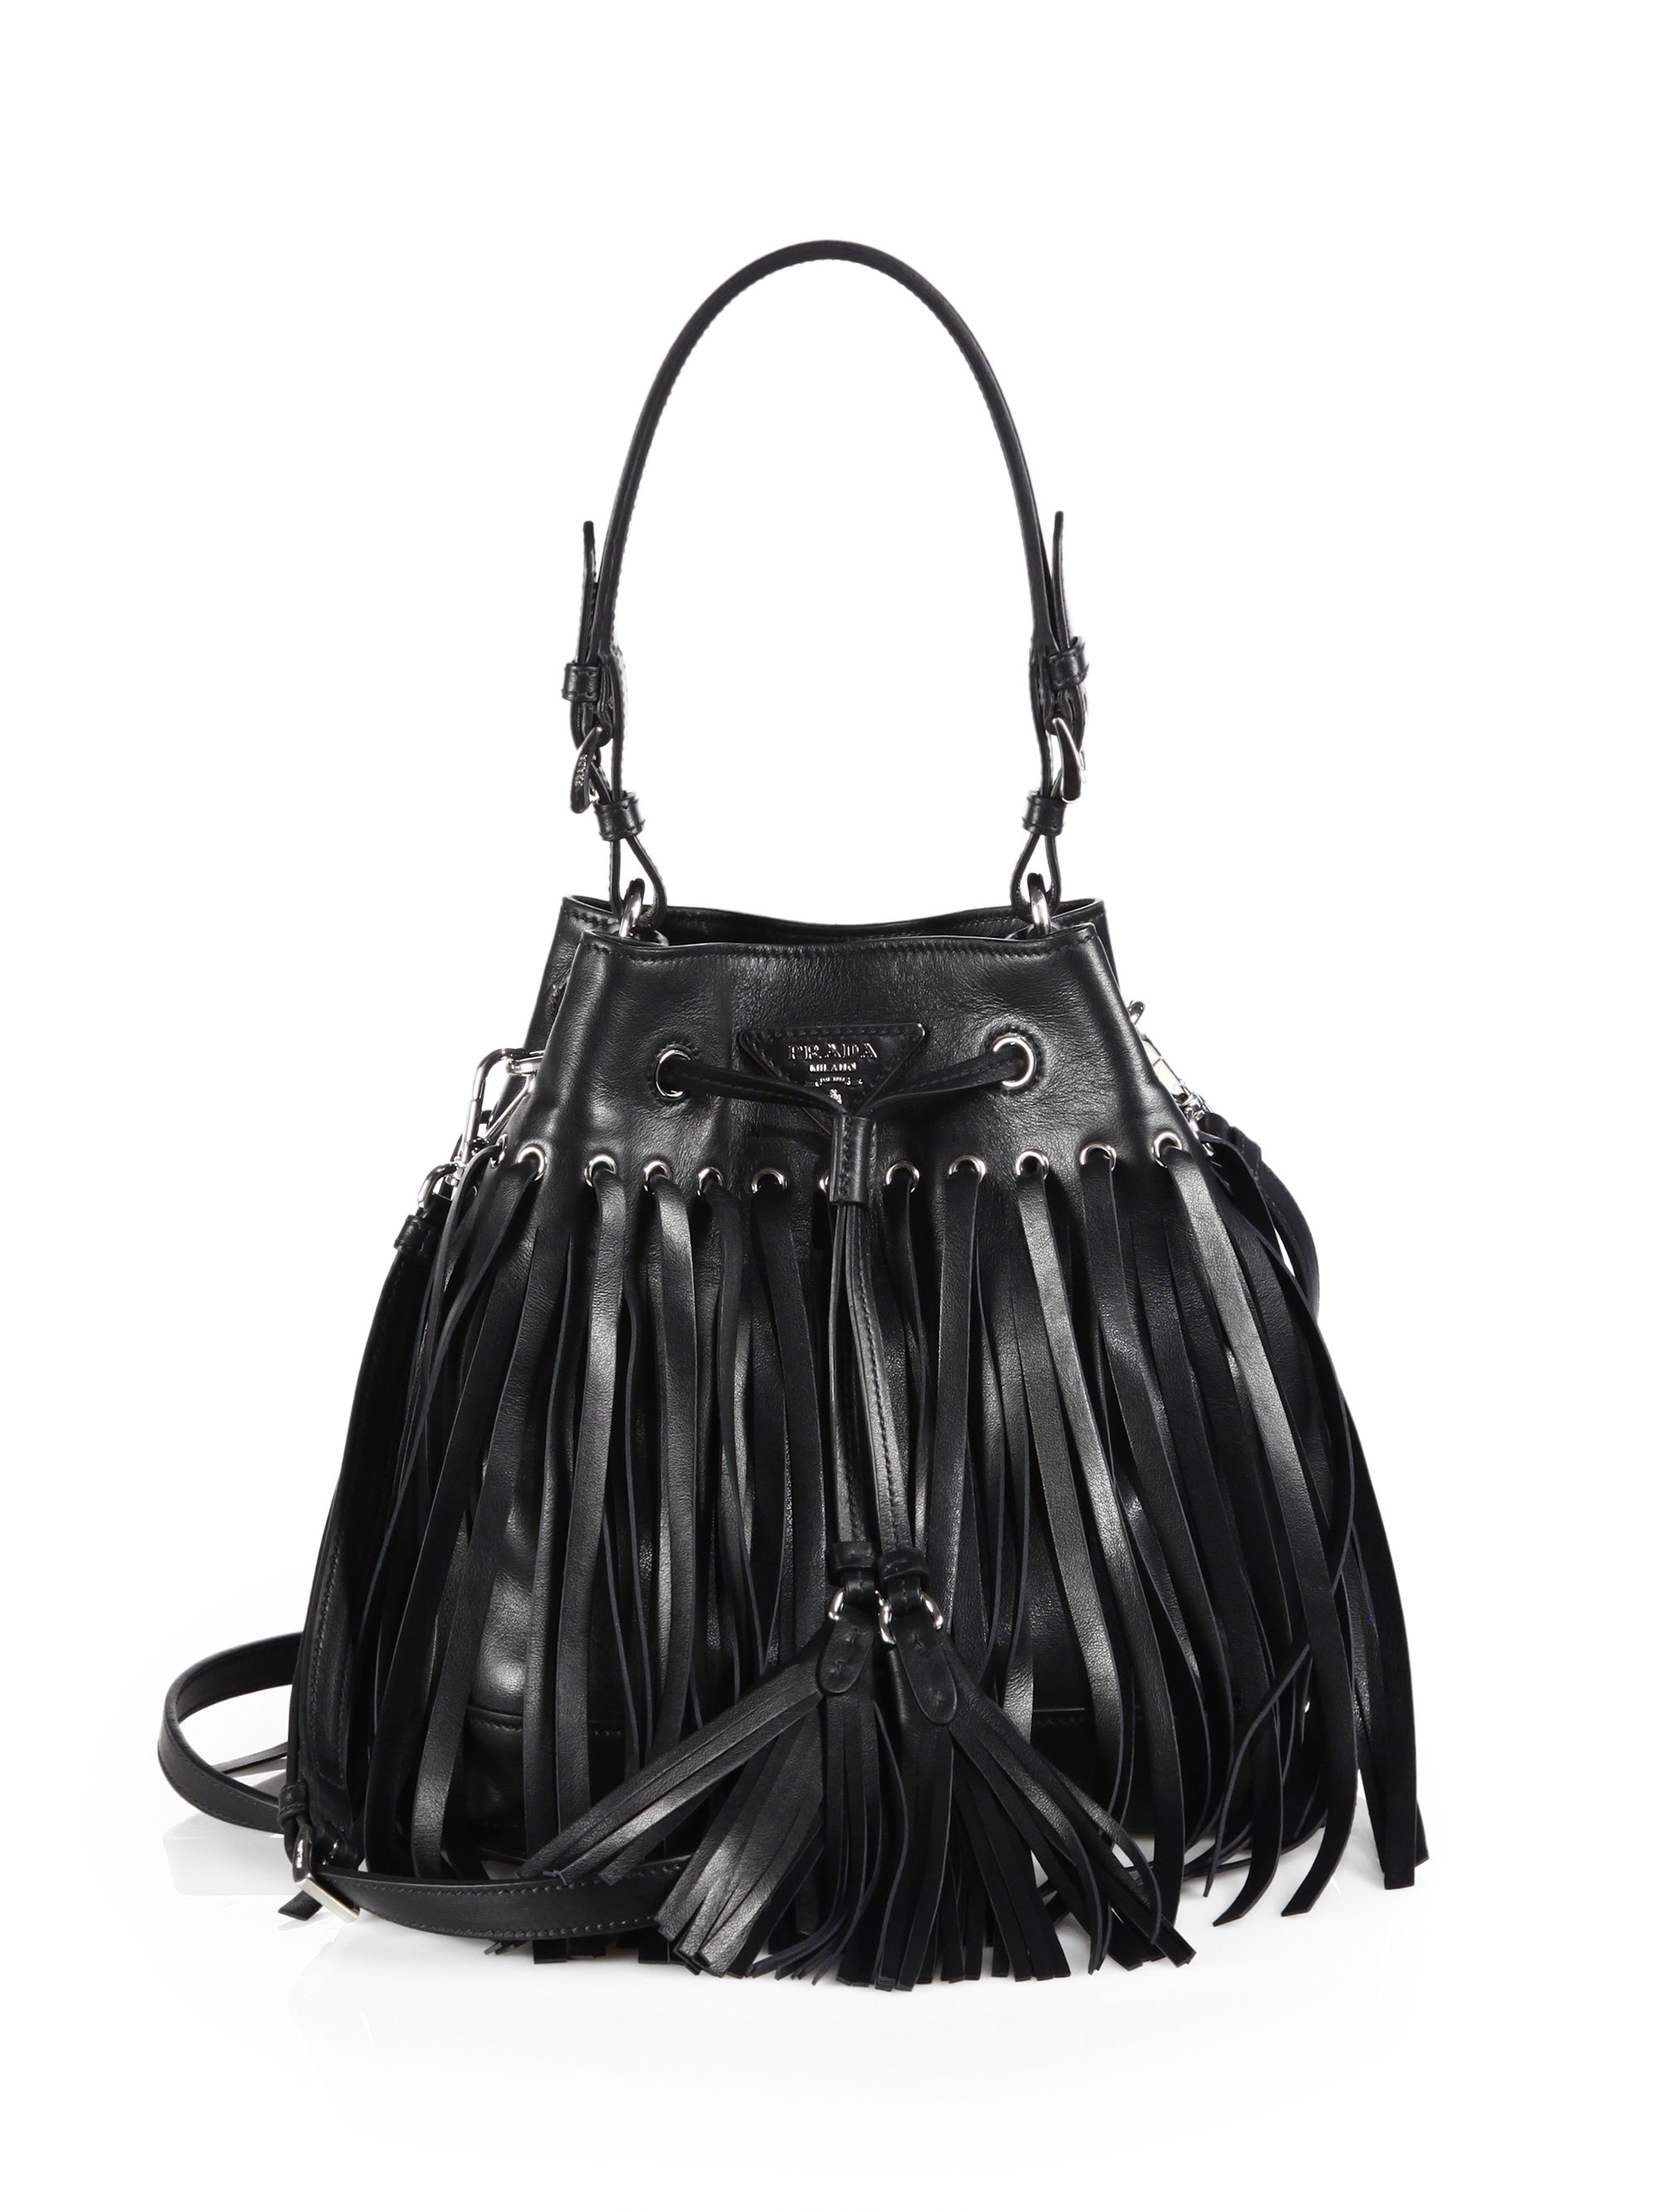 Prada Leather Fringe Bucket Bag in Black | Lyst